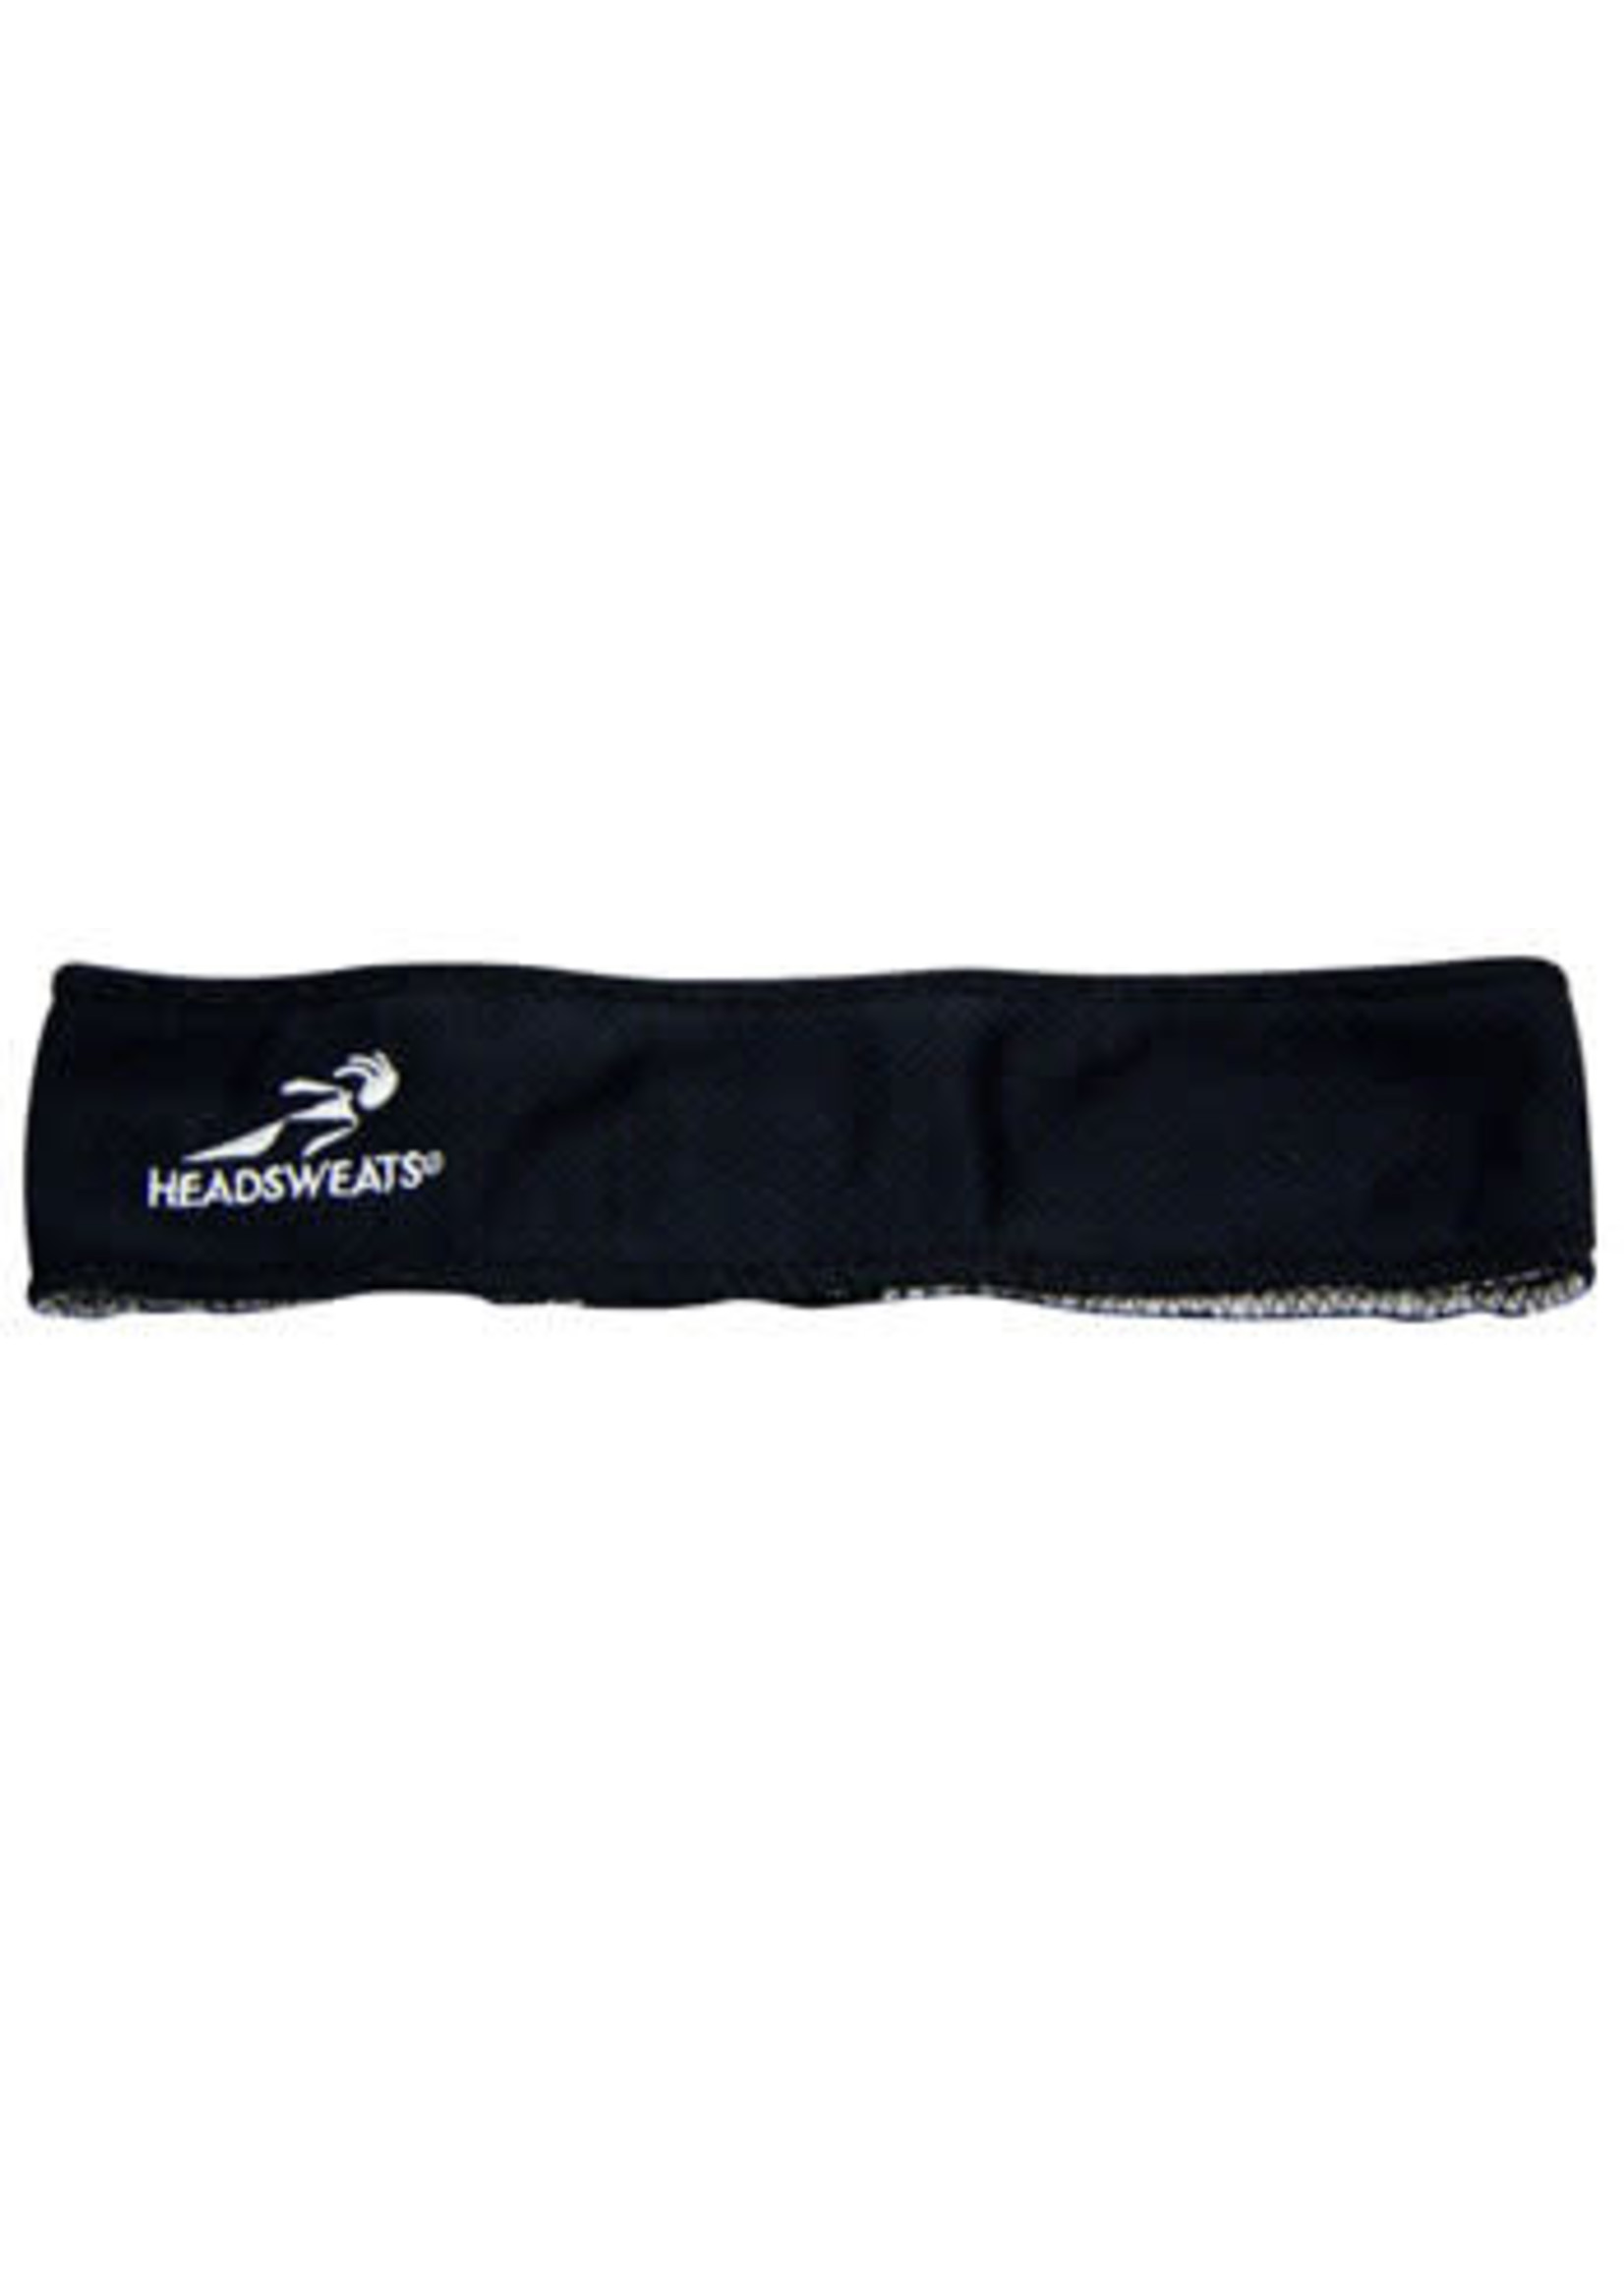 Headsweats Headsweats Eventure Topless Headband: One Size Black